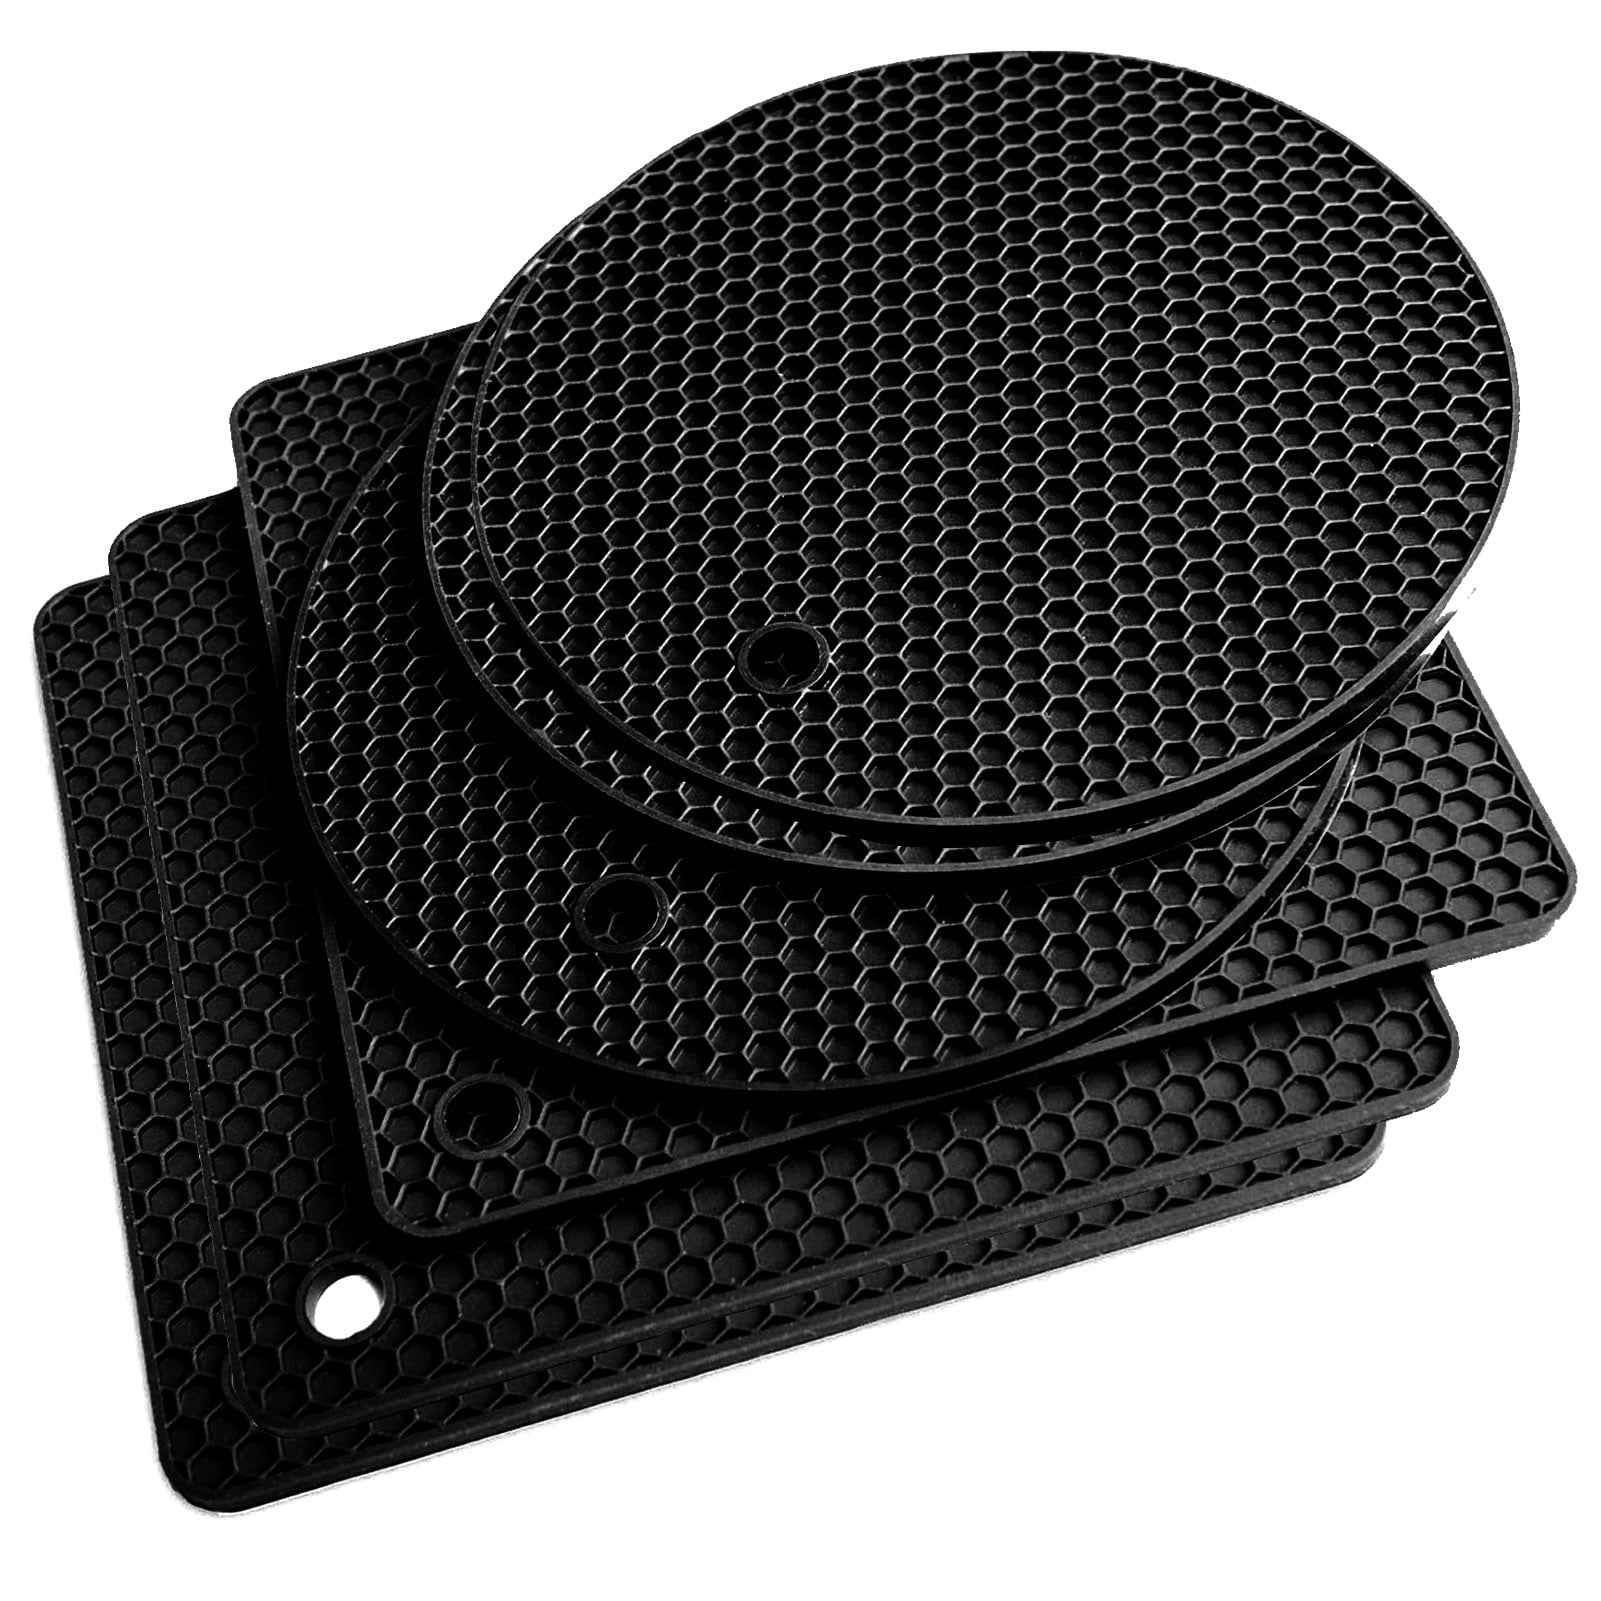 USA Kitchenaid Silicone Trivet (Assorted) Pot Holder Bowl Pad Plate Pads  Heatproof 260 Degree Single Black Color + Free Shipping